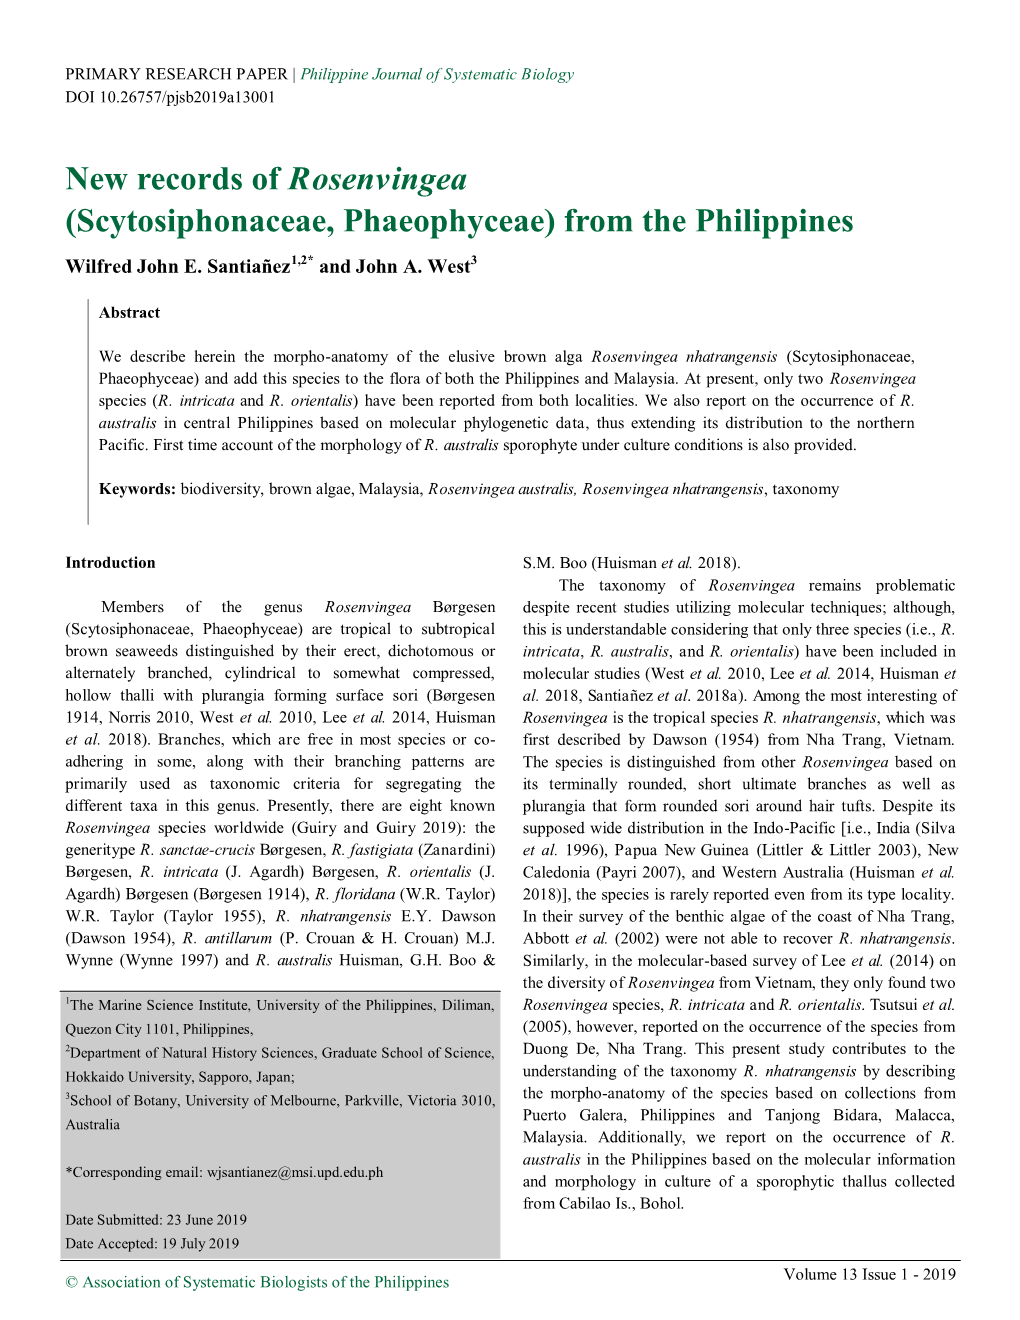 New Records of Rosenvingea (Scytosiphonaceae, Phaeophyceae) from the Philippines Wilfred John E